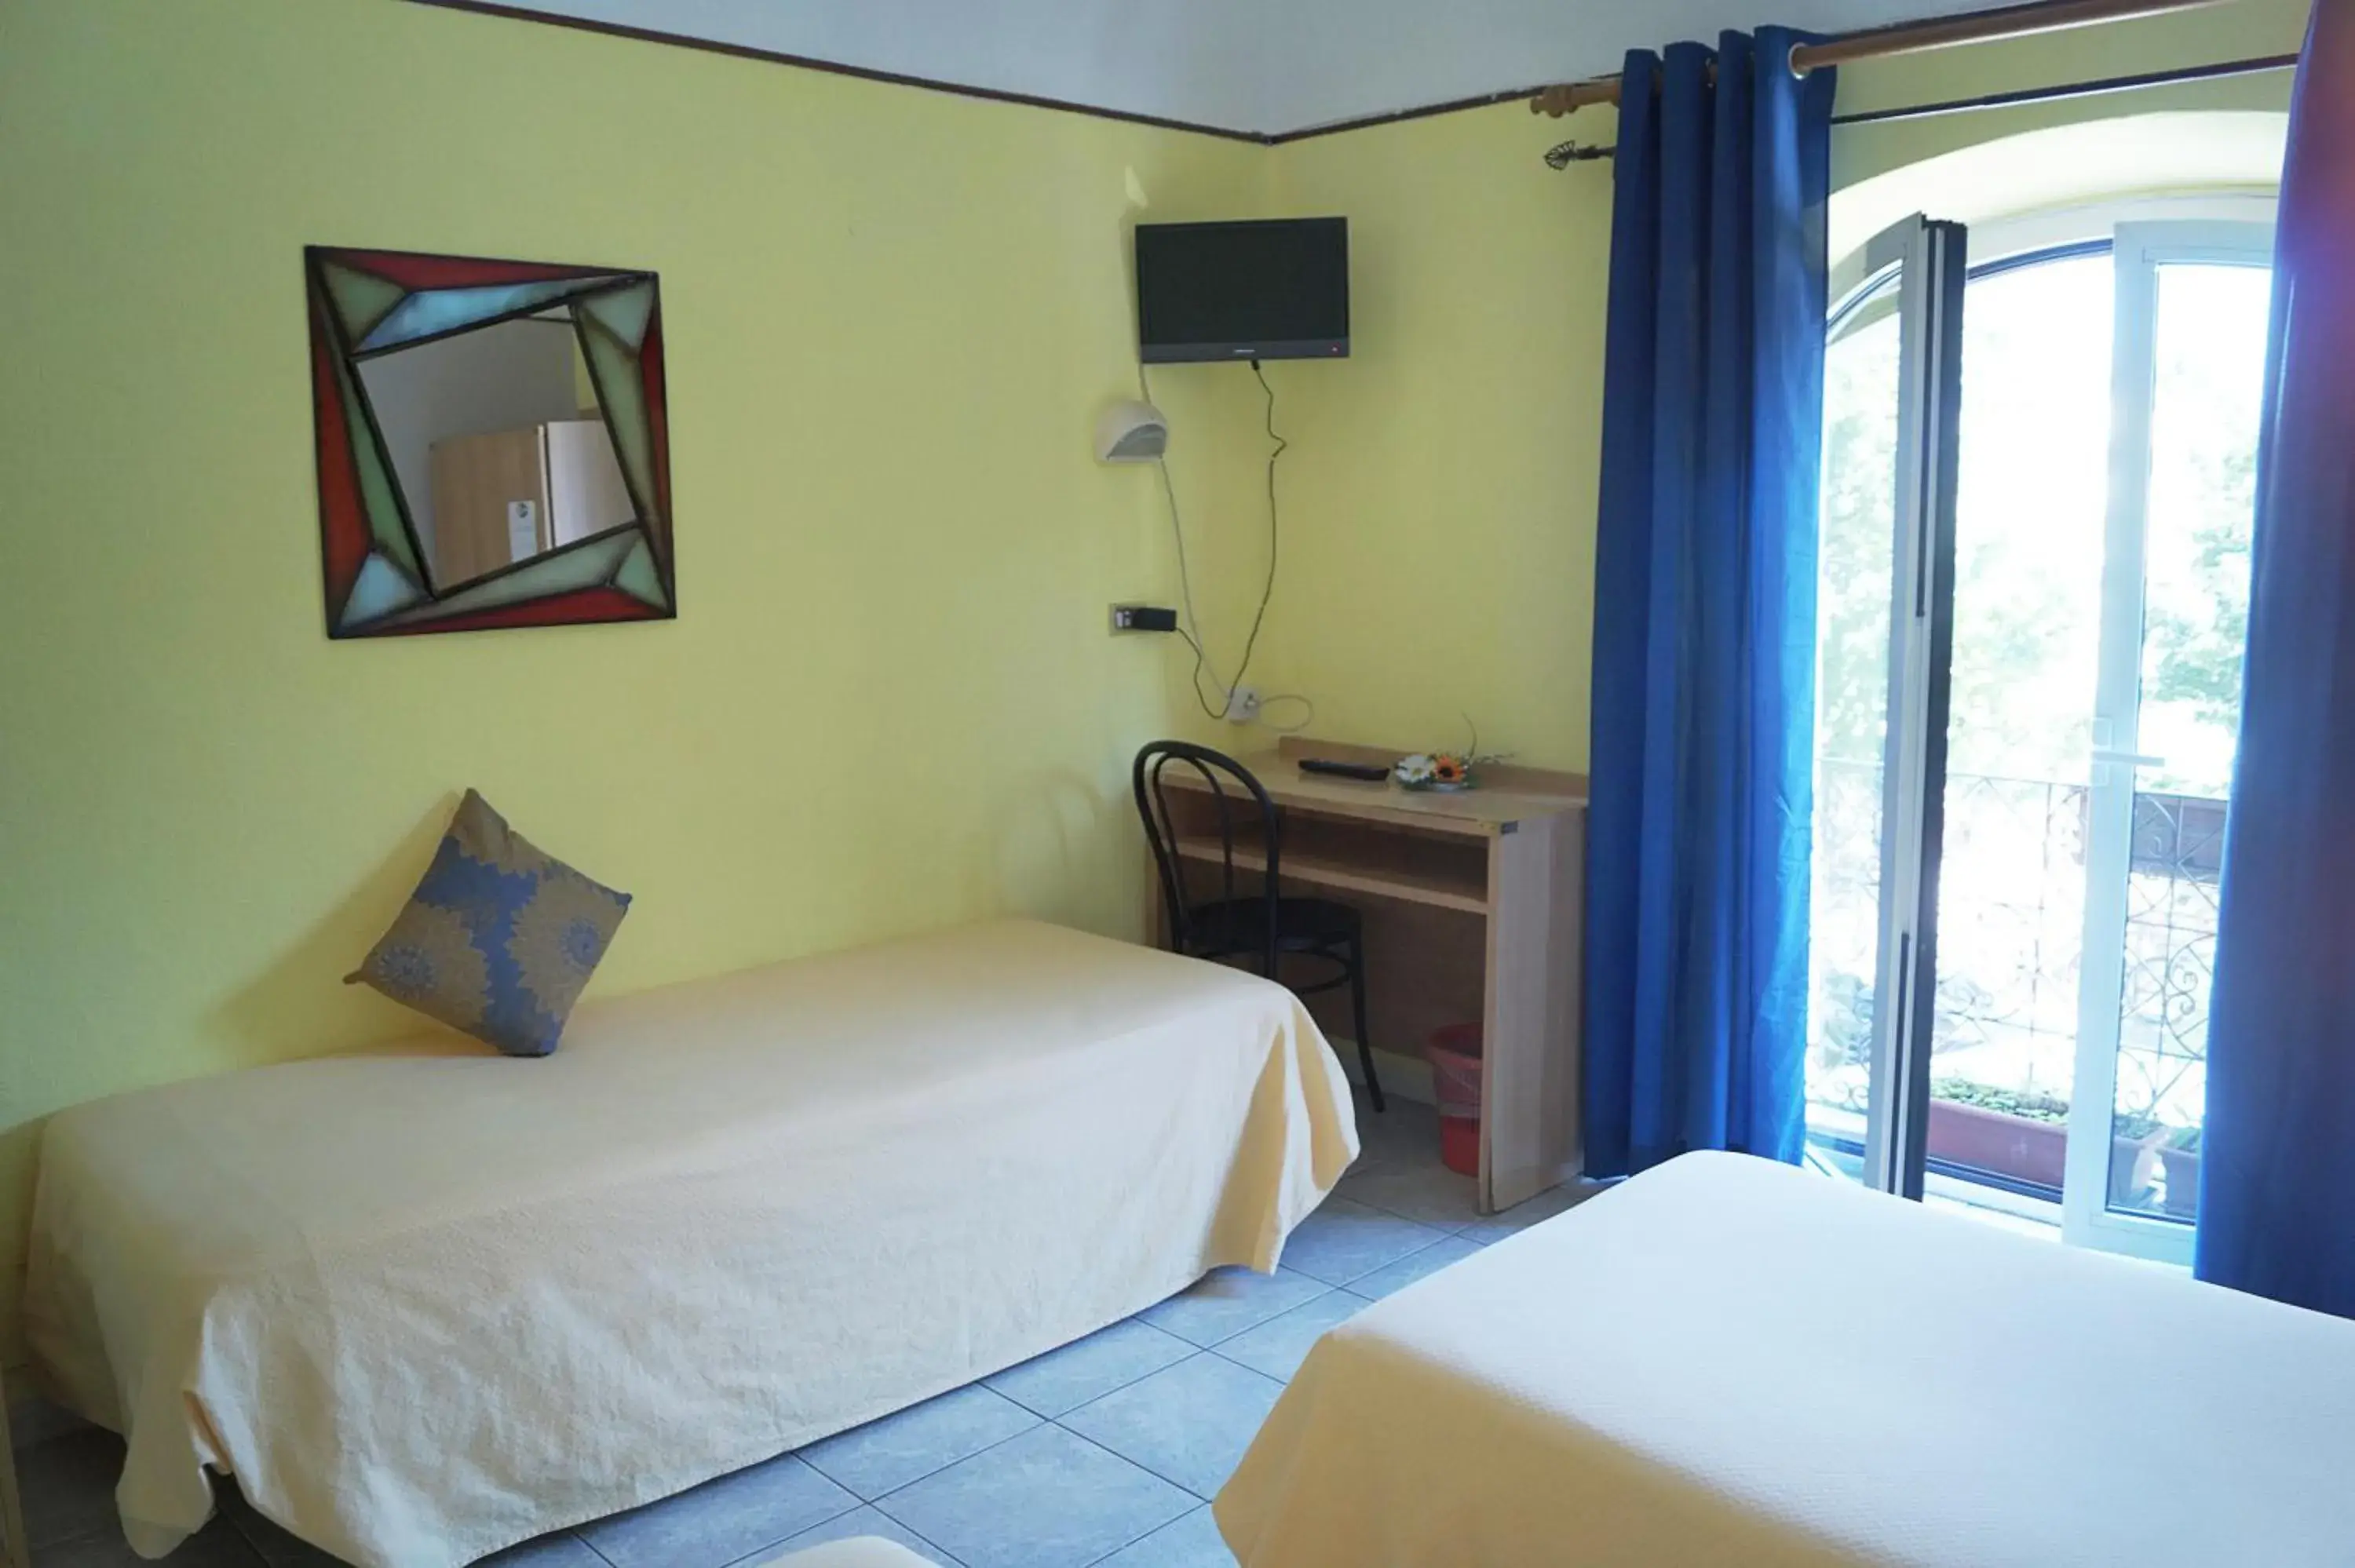 Bed, Room Photo in Hotel Stazione